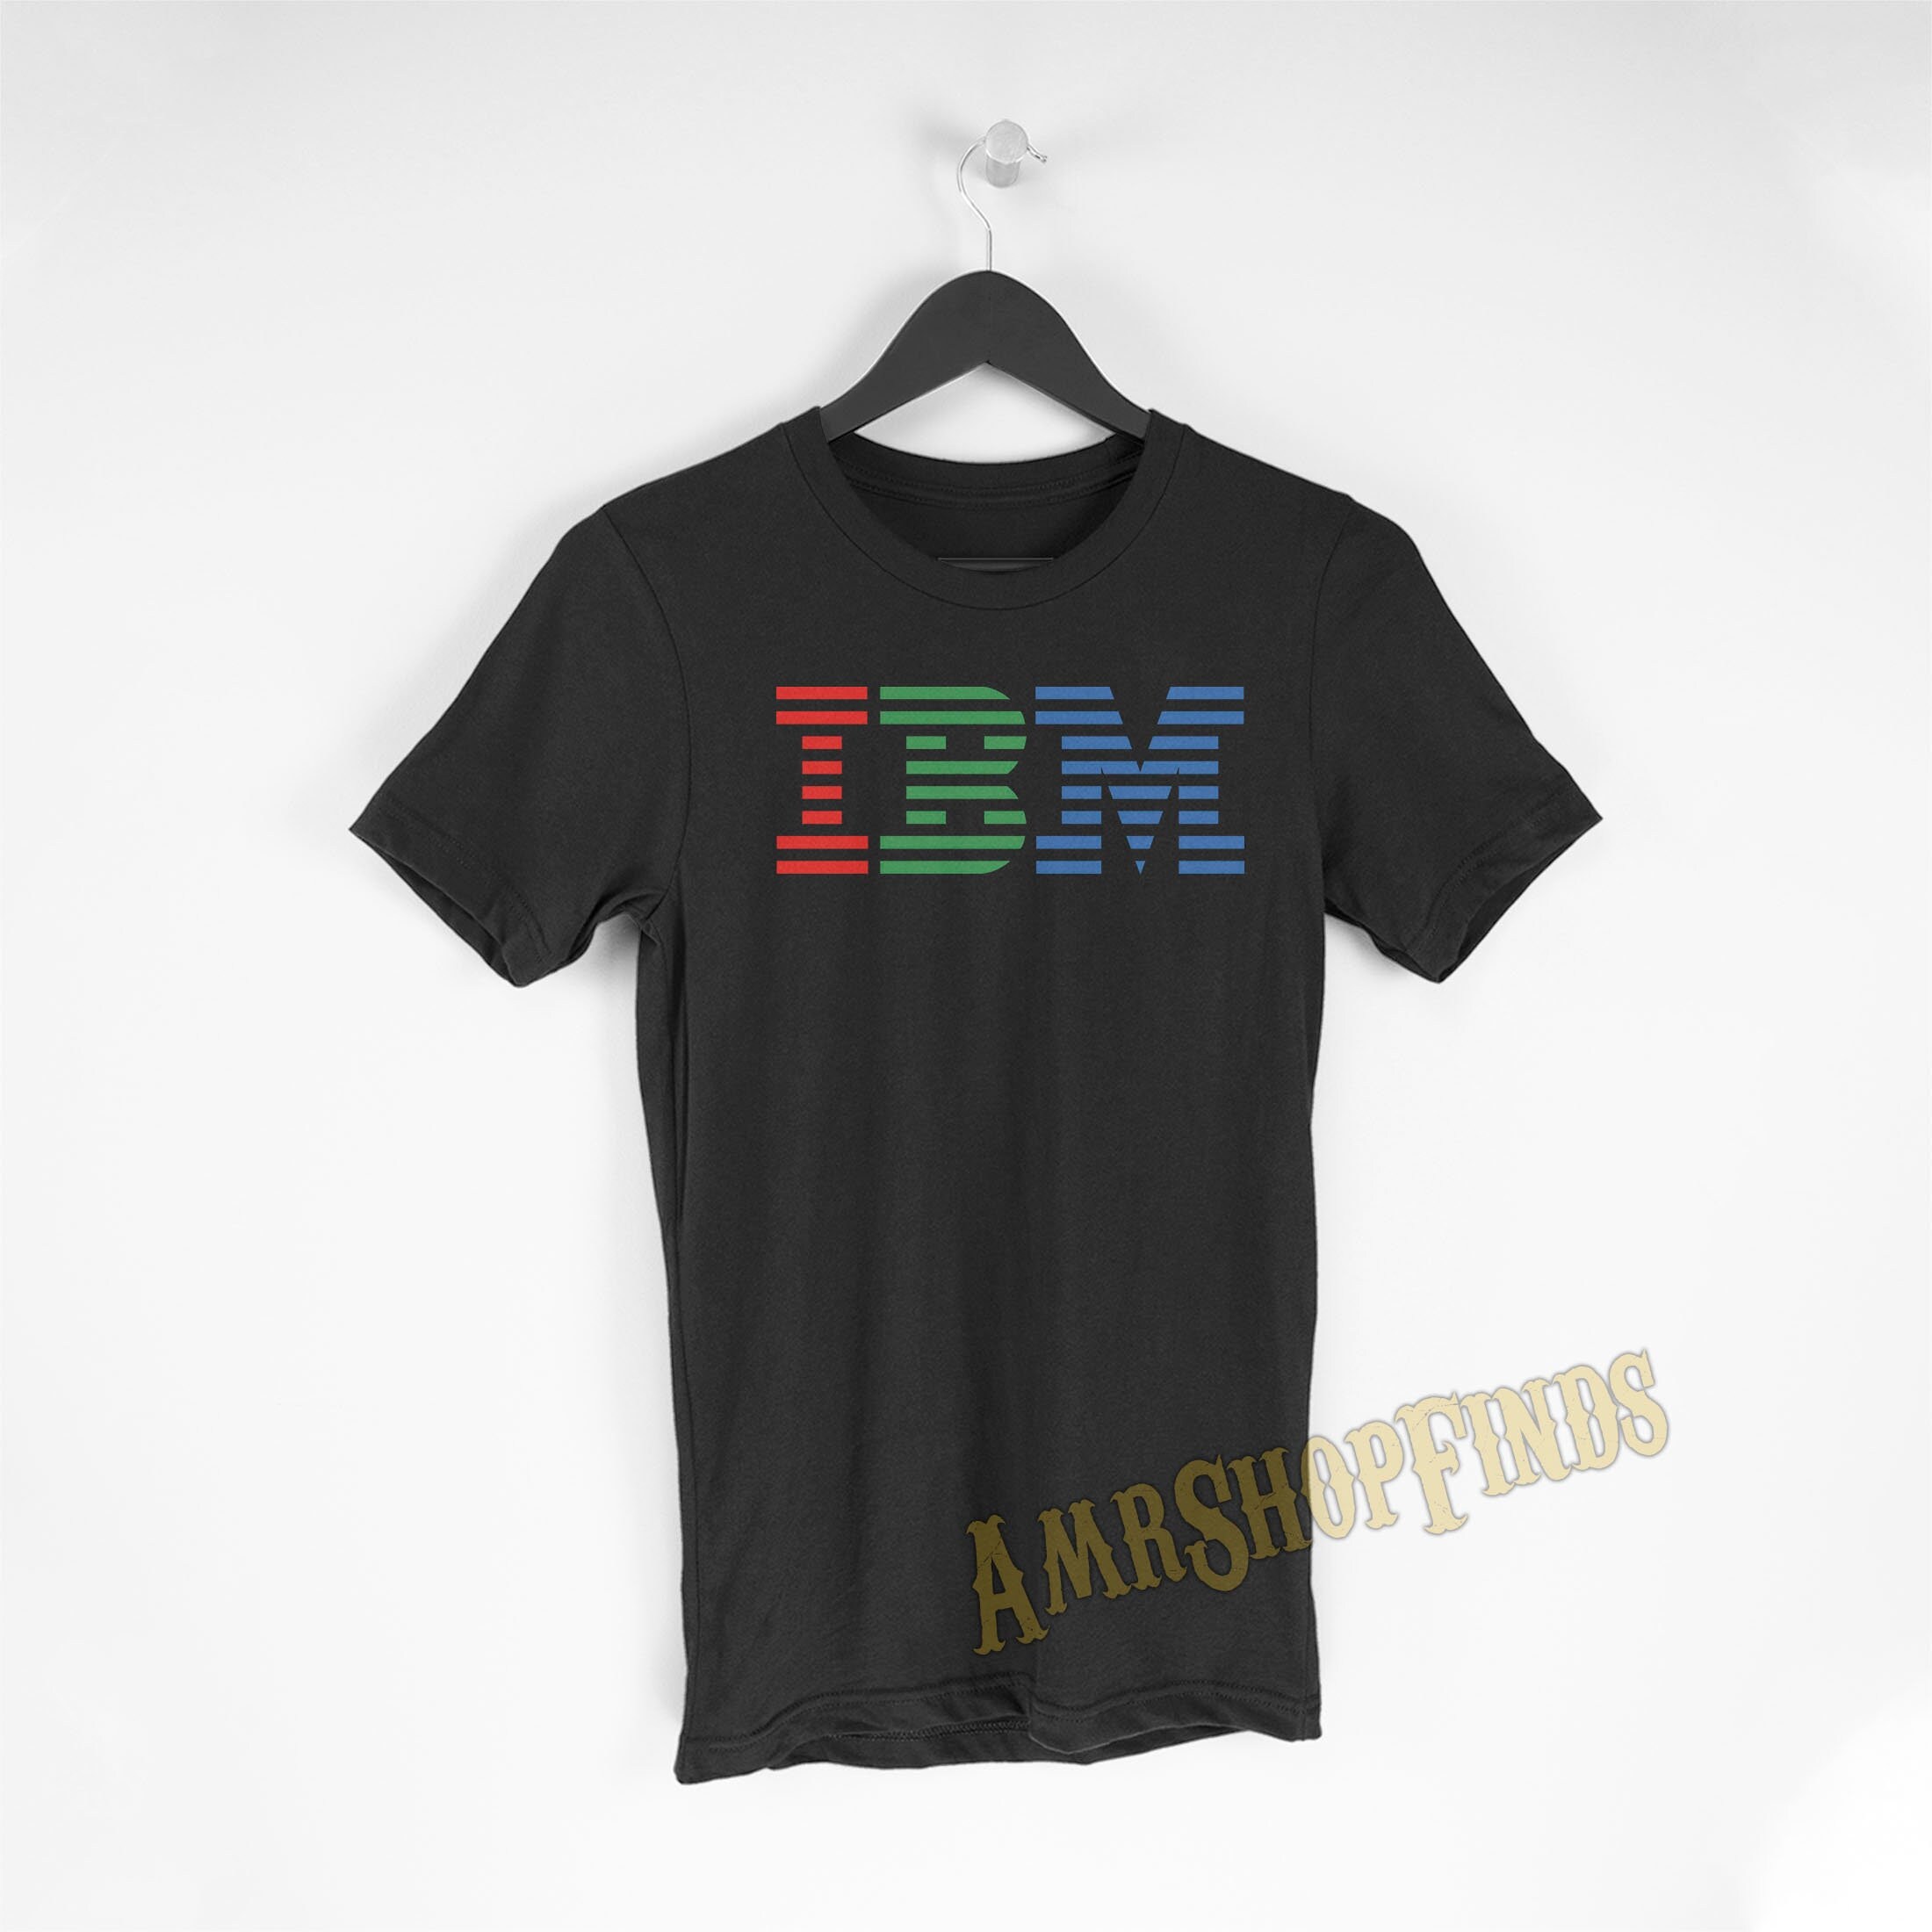 IBM T-shirt International Business Machines American Multi Tech Corp  Classic Black White T-shirt Unisex for Men Women -  Canada